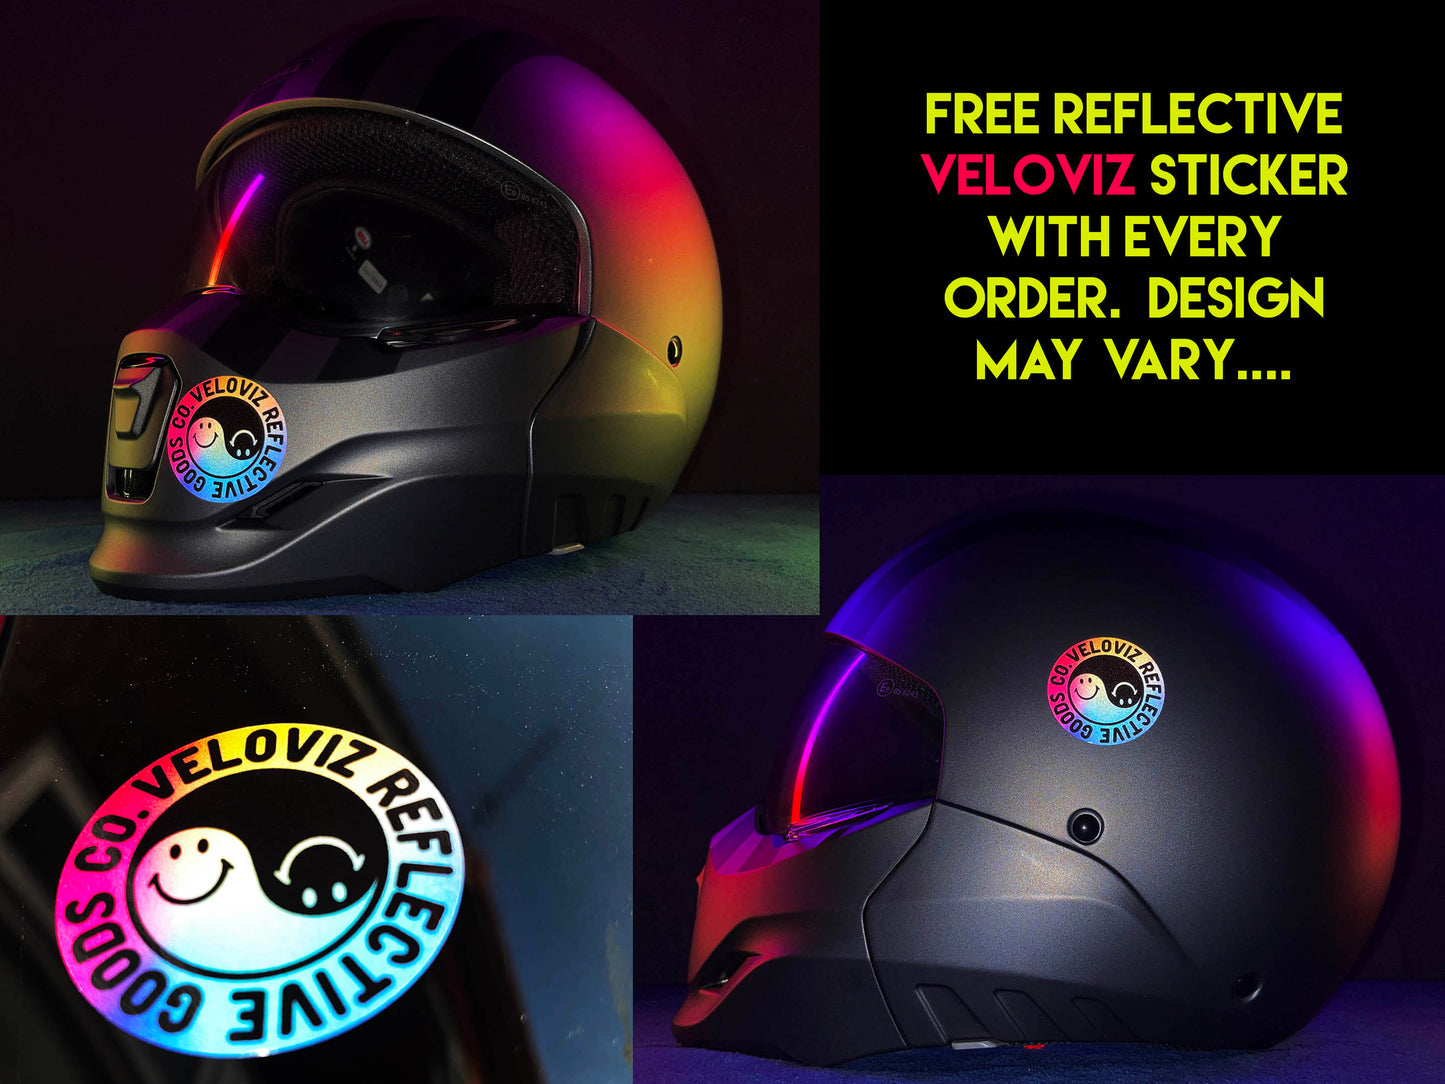 Valueviz Reflective Alien Head (Medium) Stickers